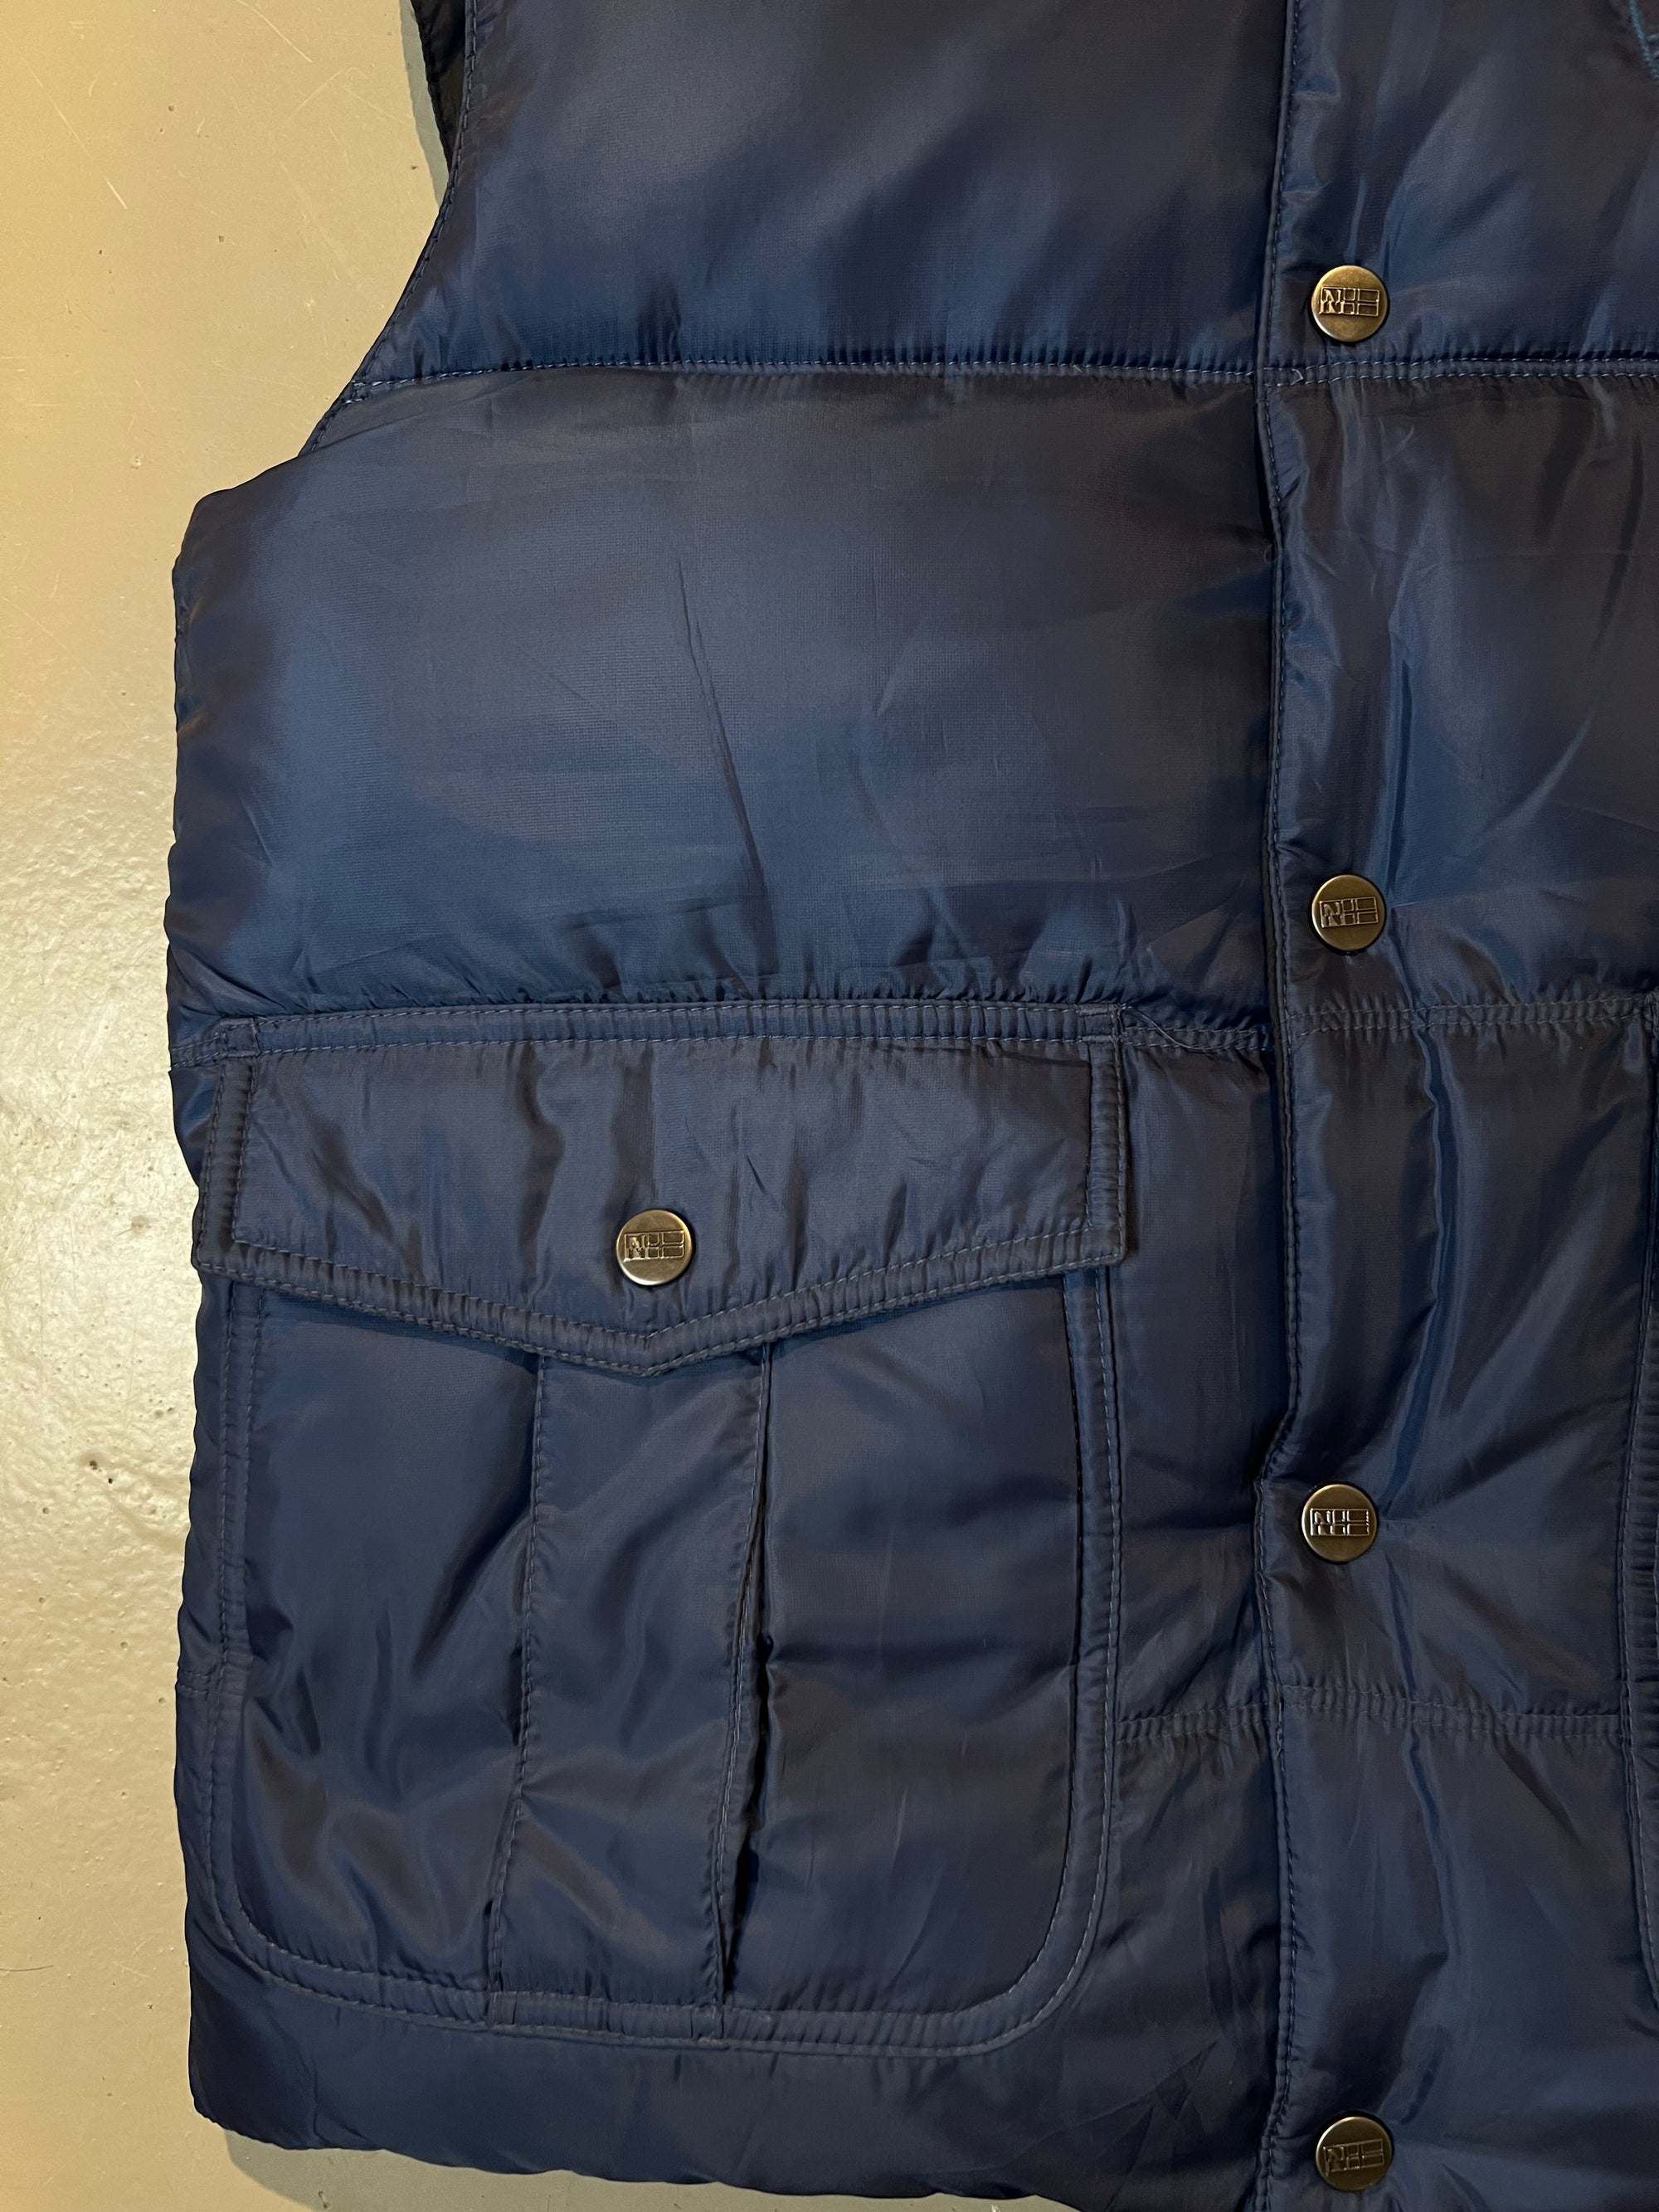 Produktbild der Vintage Napapijri Blue Vest M/L Tasche im Detail.